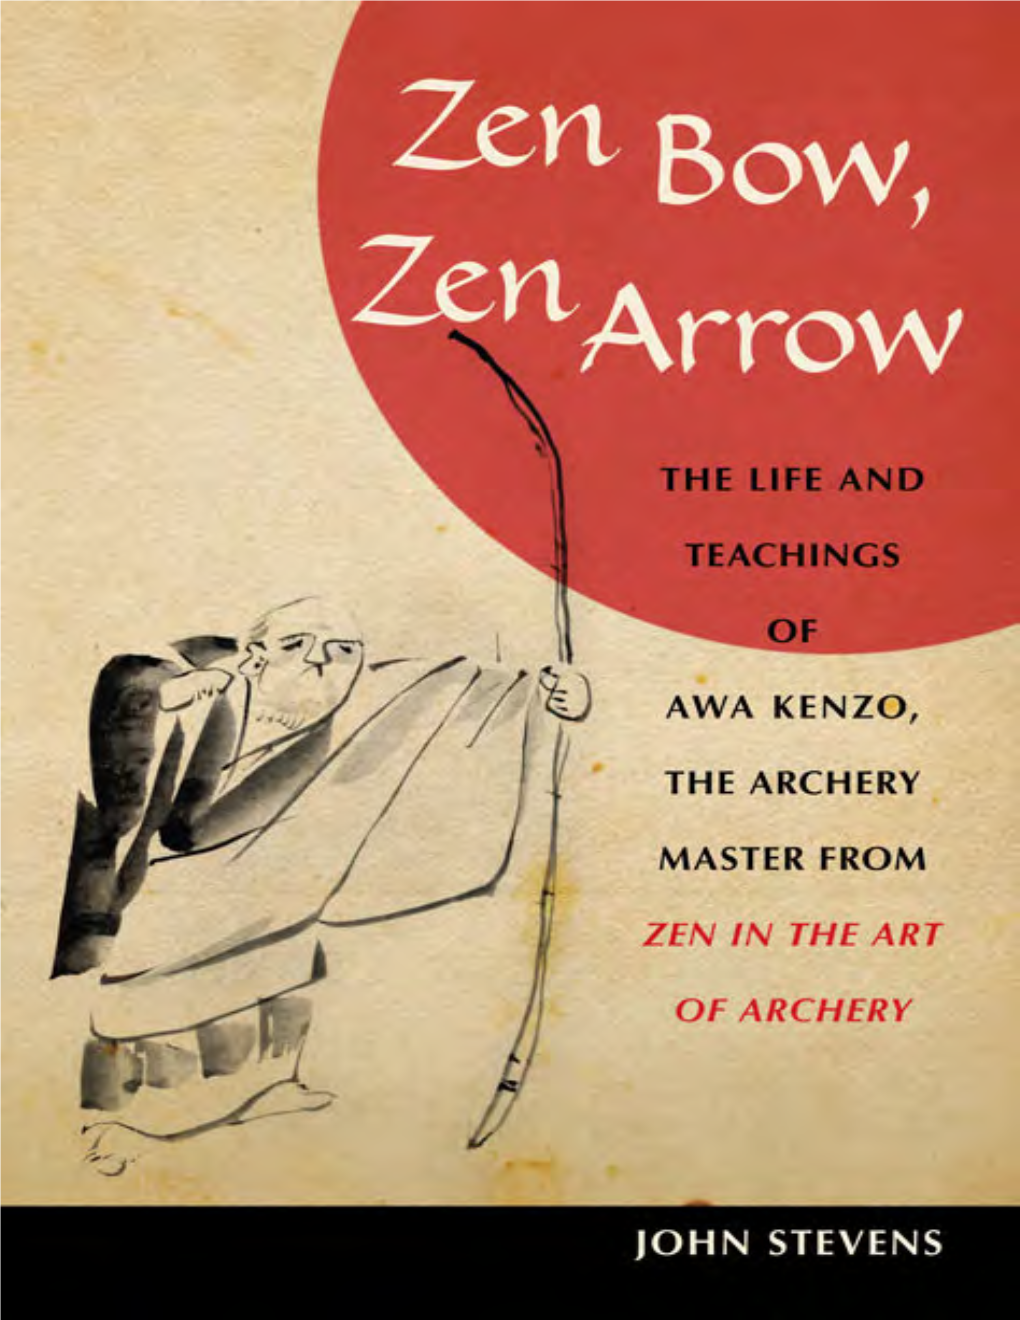 Zen Bow, Zen Arrow • • • the Life and Teachings of Awa Kenzo, the Archery Master from Zen in the Art of Archery • • • John Stevens